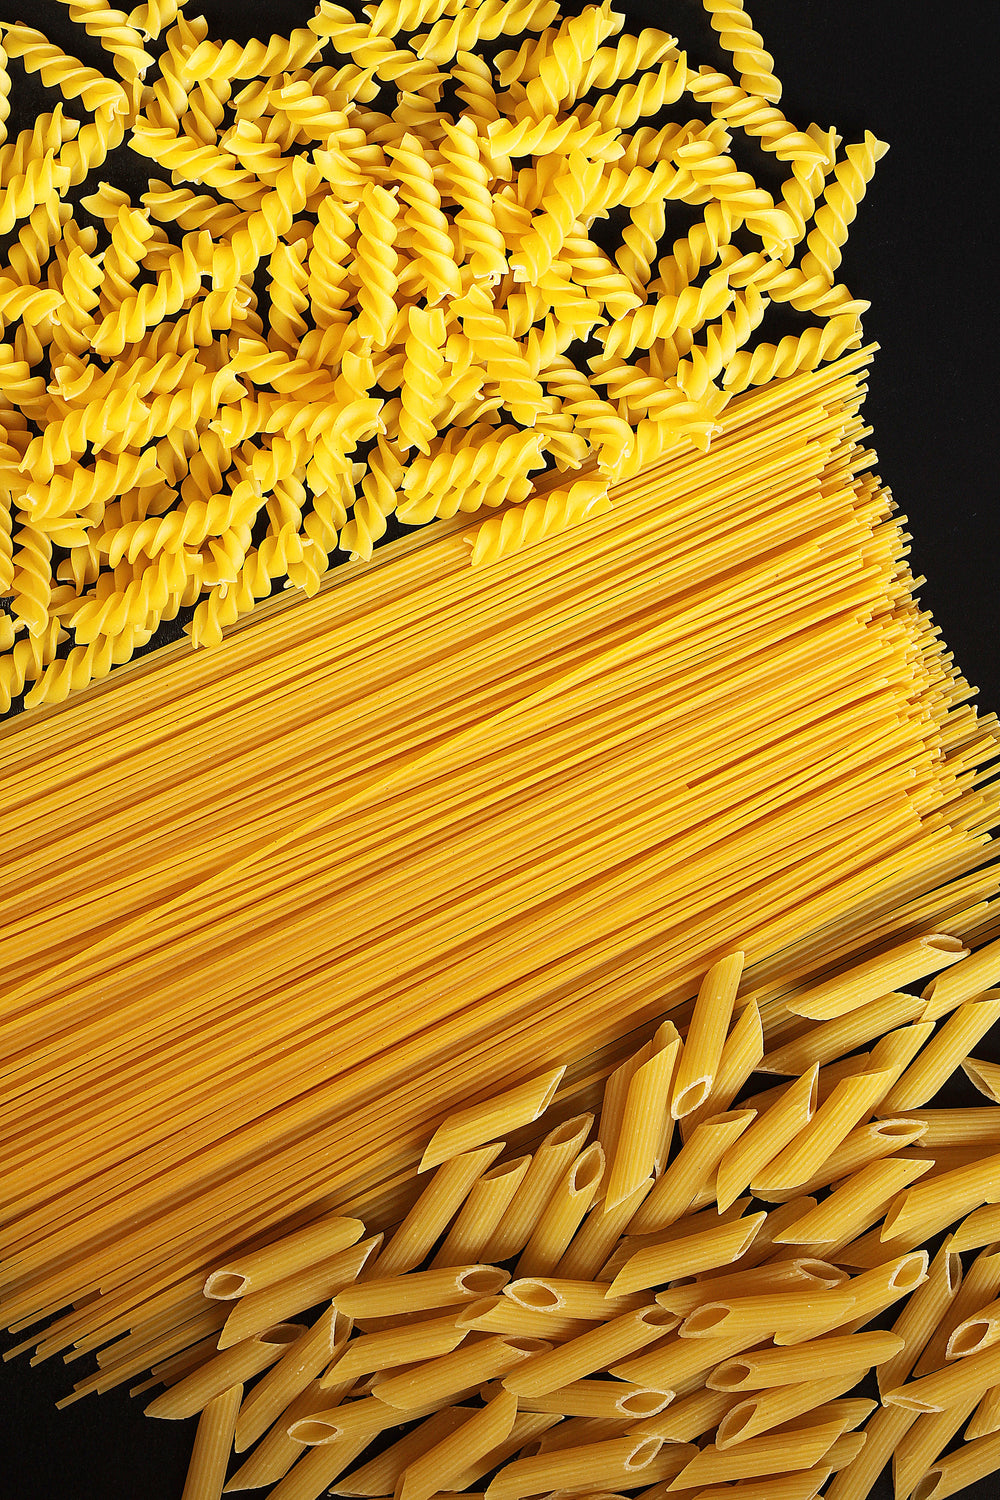 各种类型的uncooked pasta on black counter